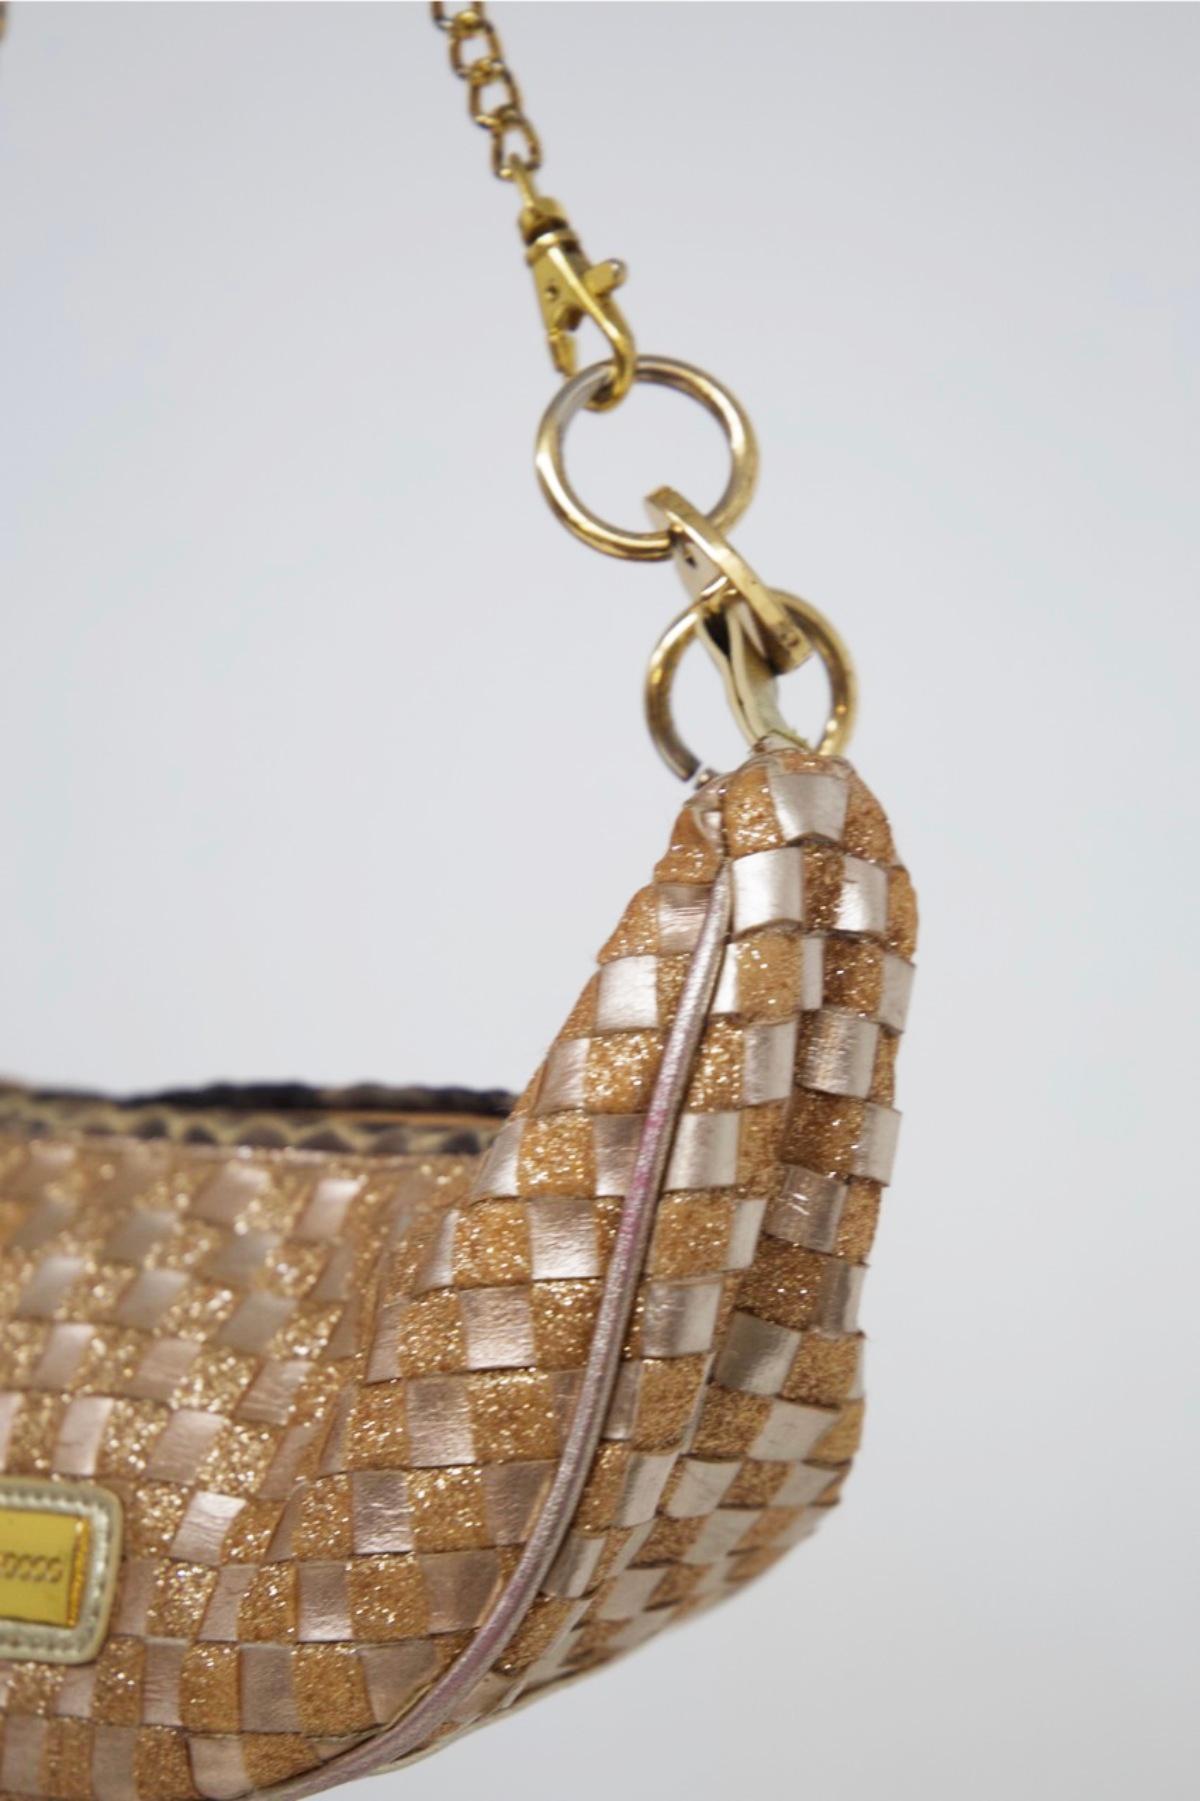 Rocco Barocco Vintage Glittering Fabric Handbag In Good Condition For Sale In Milano, IT